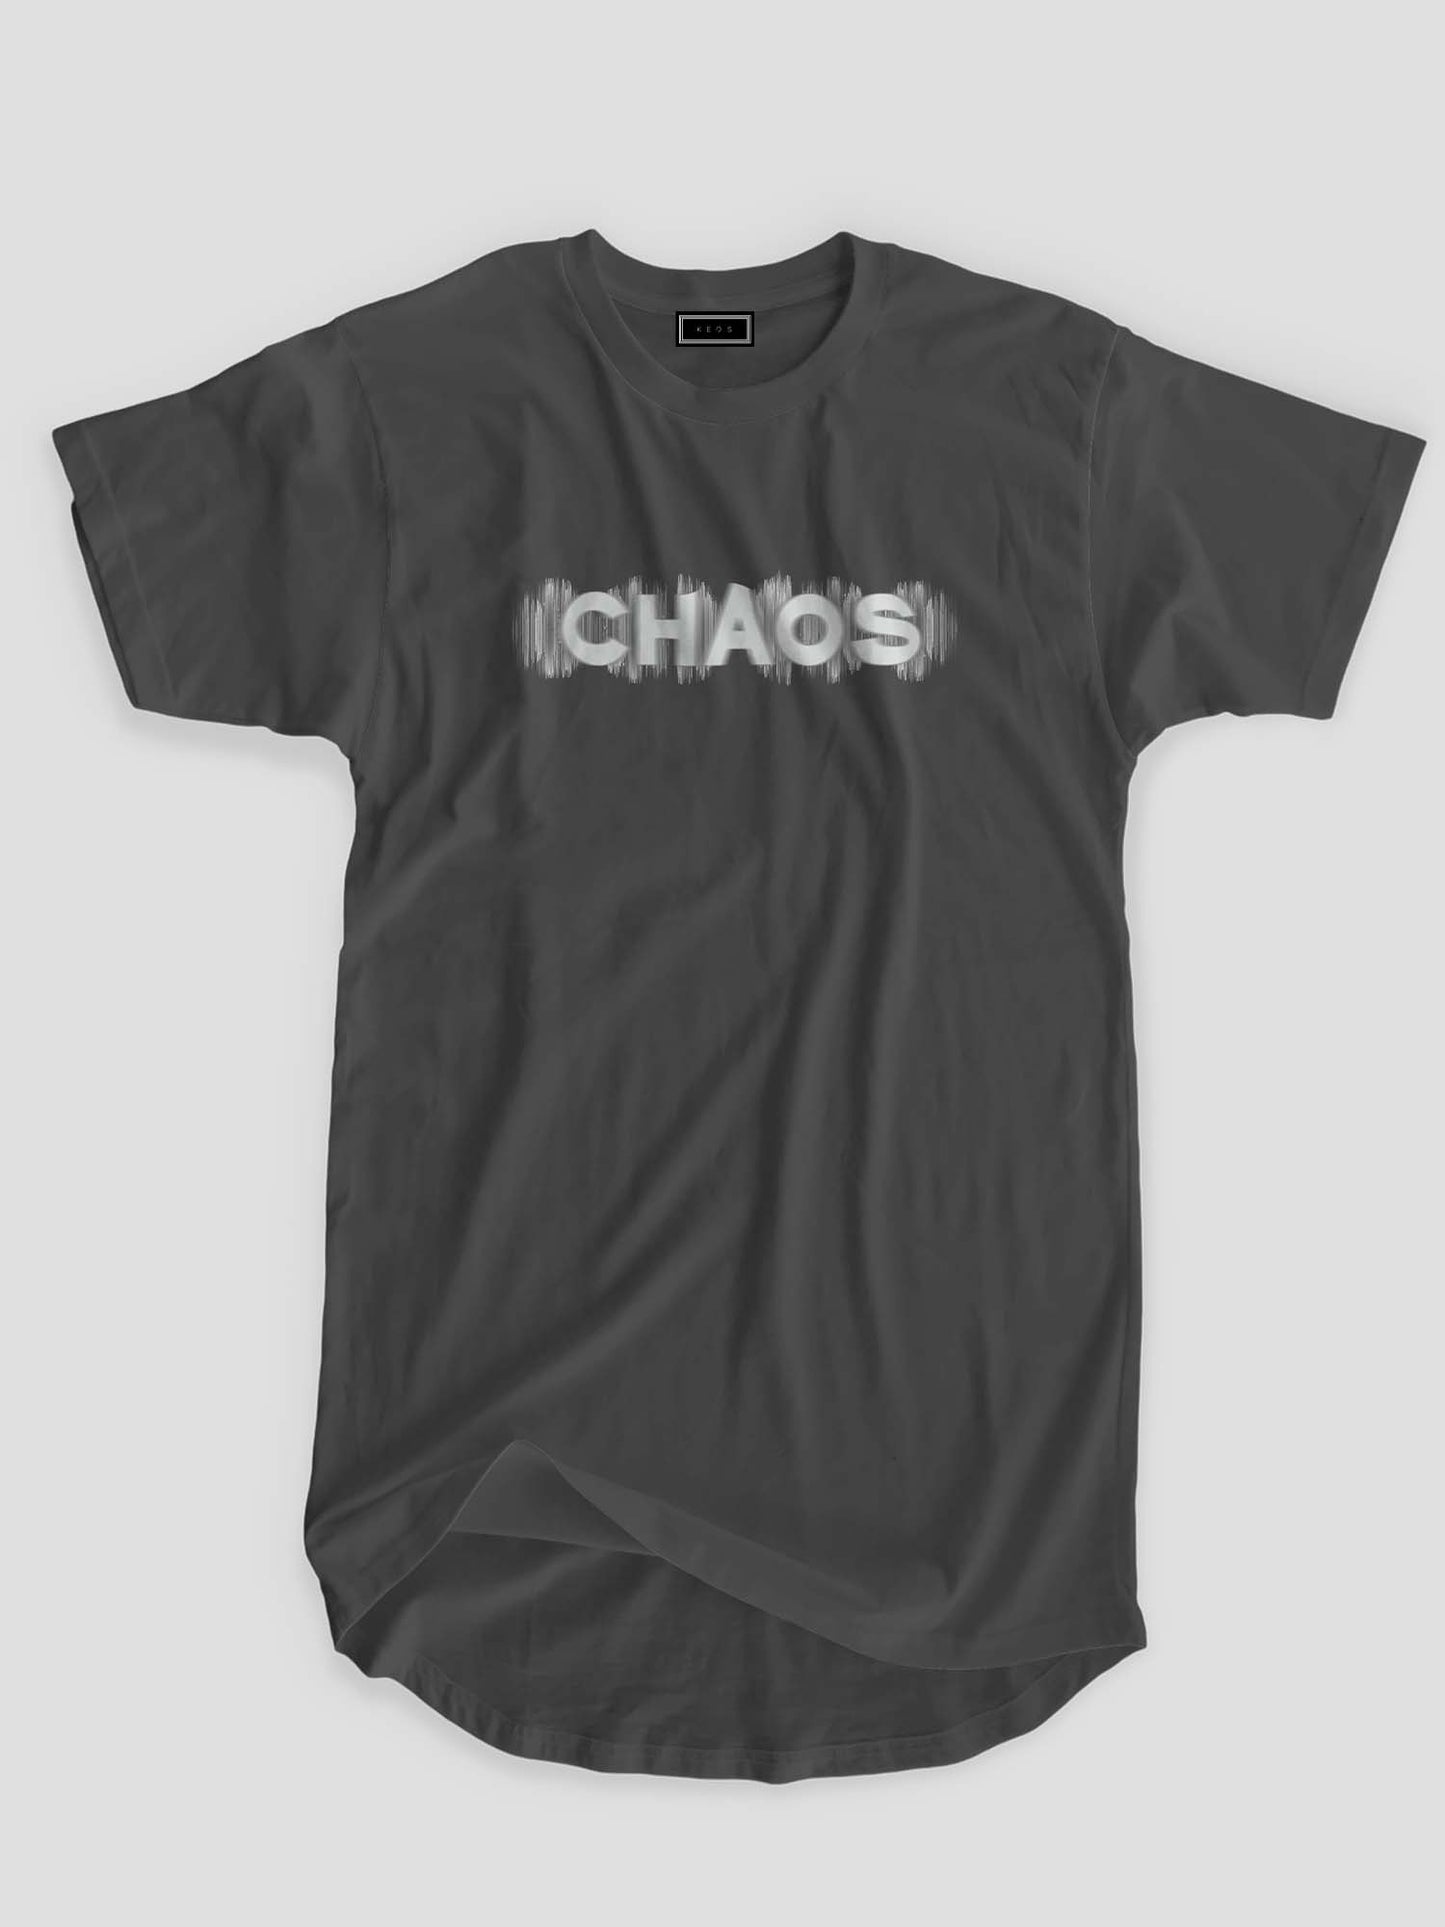 Chaos Organic Longline Cotton T-shirt - keos.life